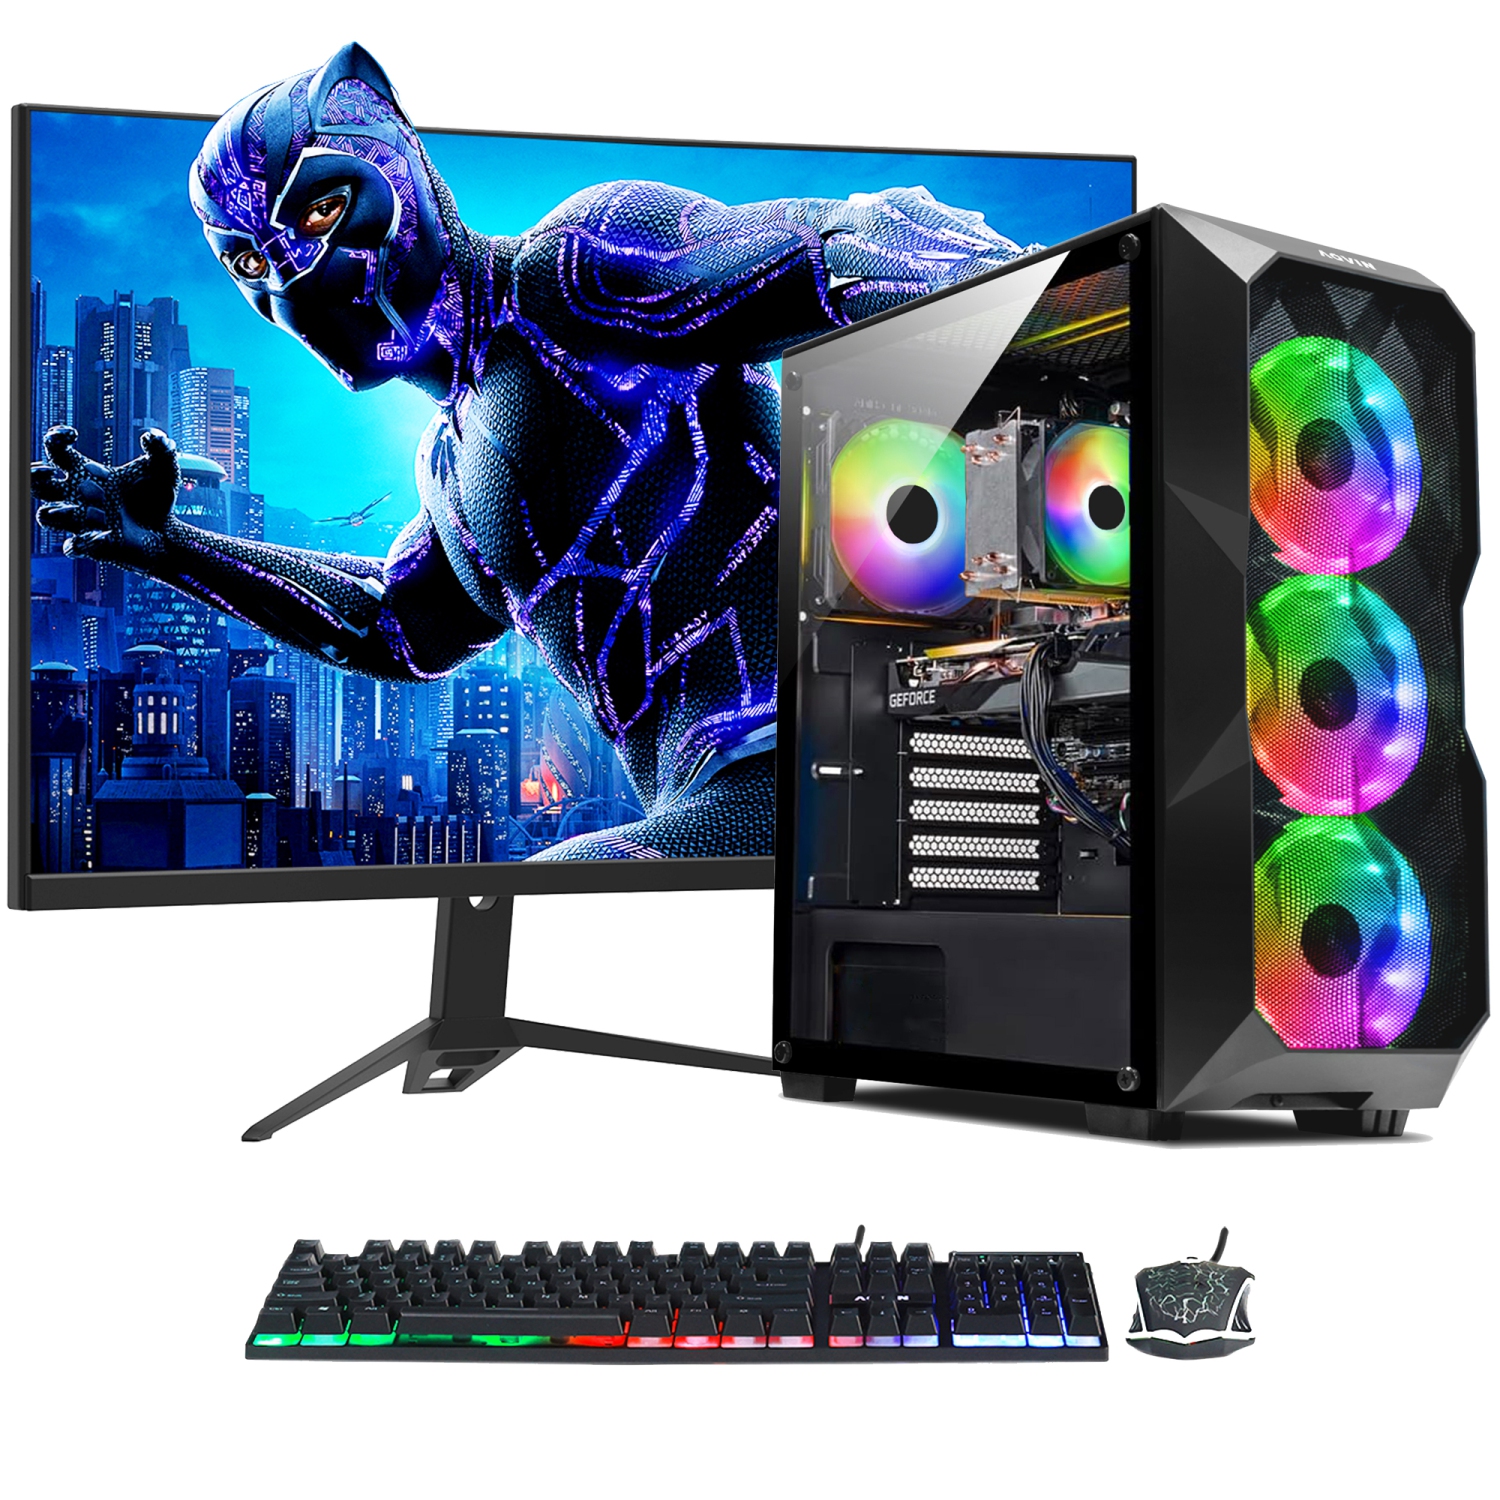 AQVIN Gaming PC AQB70 Desktop Computer Tower, GeForce RTX 3060 12GB, Intel Core i7 processor, 32GB DDR4 RAM, 1000GB (Fast Boot) SSD, WIN 10 Pro, New 27-inch Curved Gaming Monitor